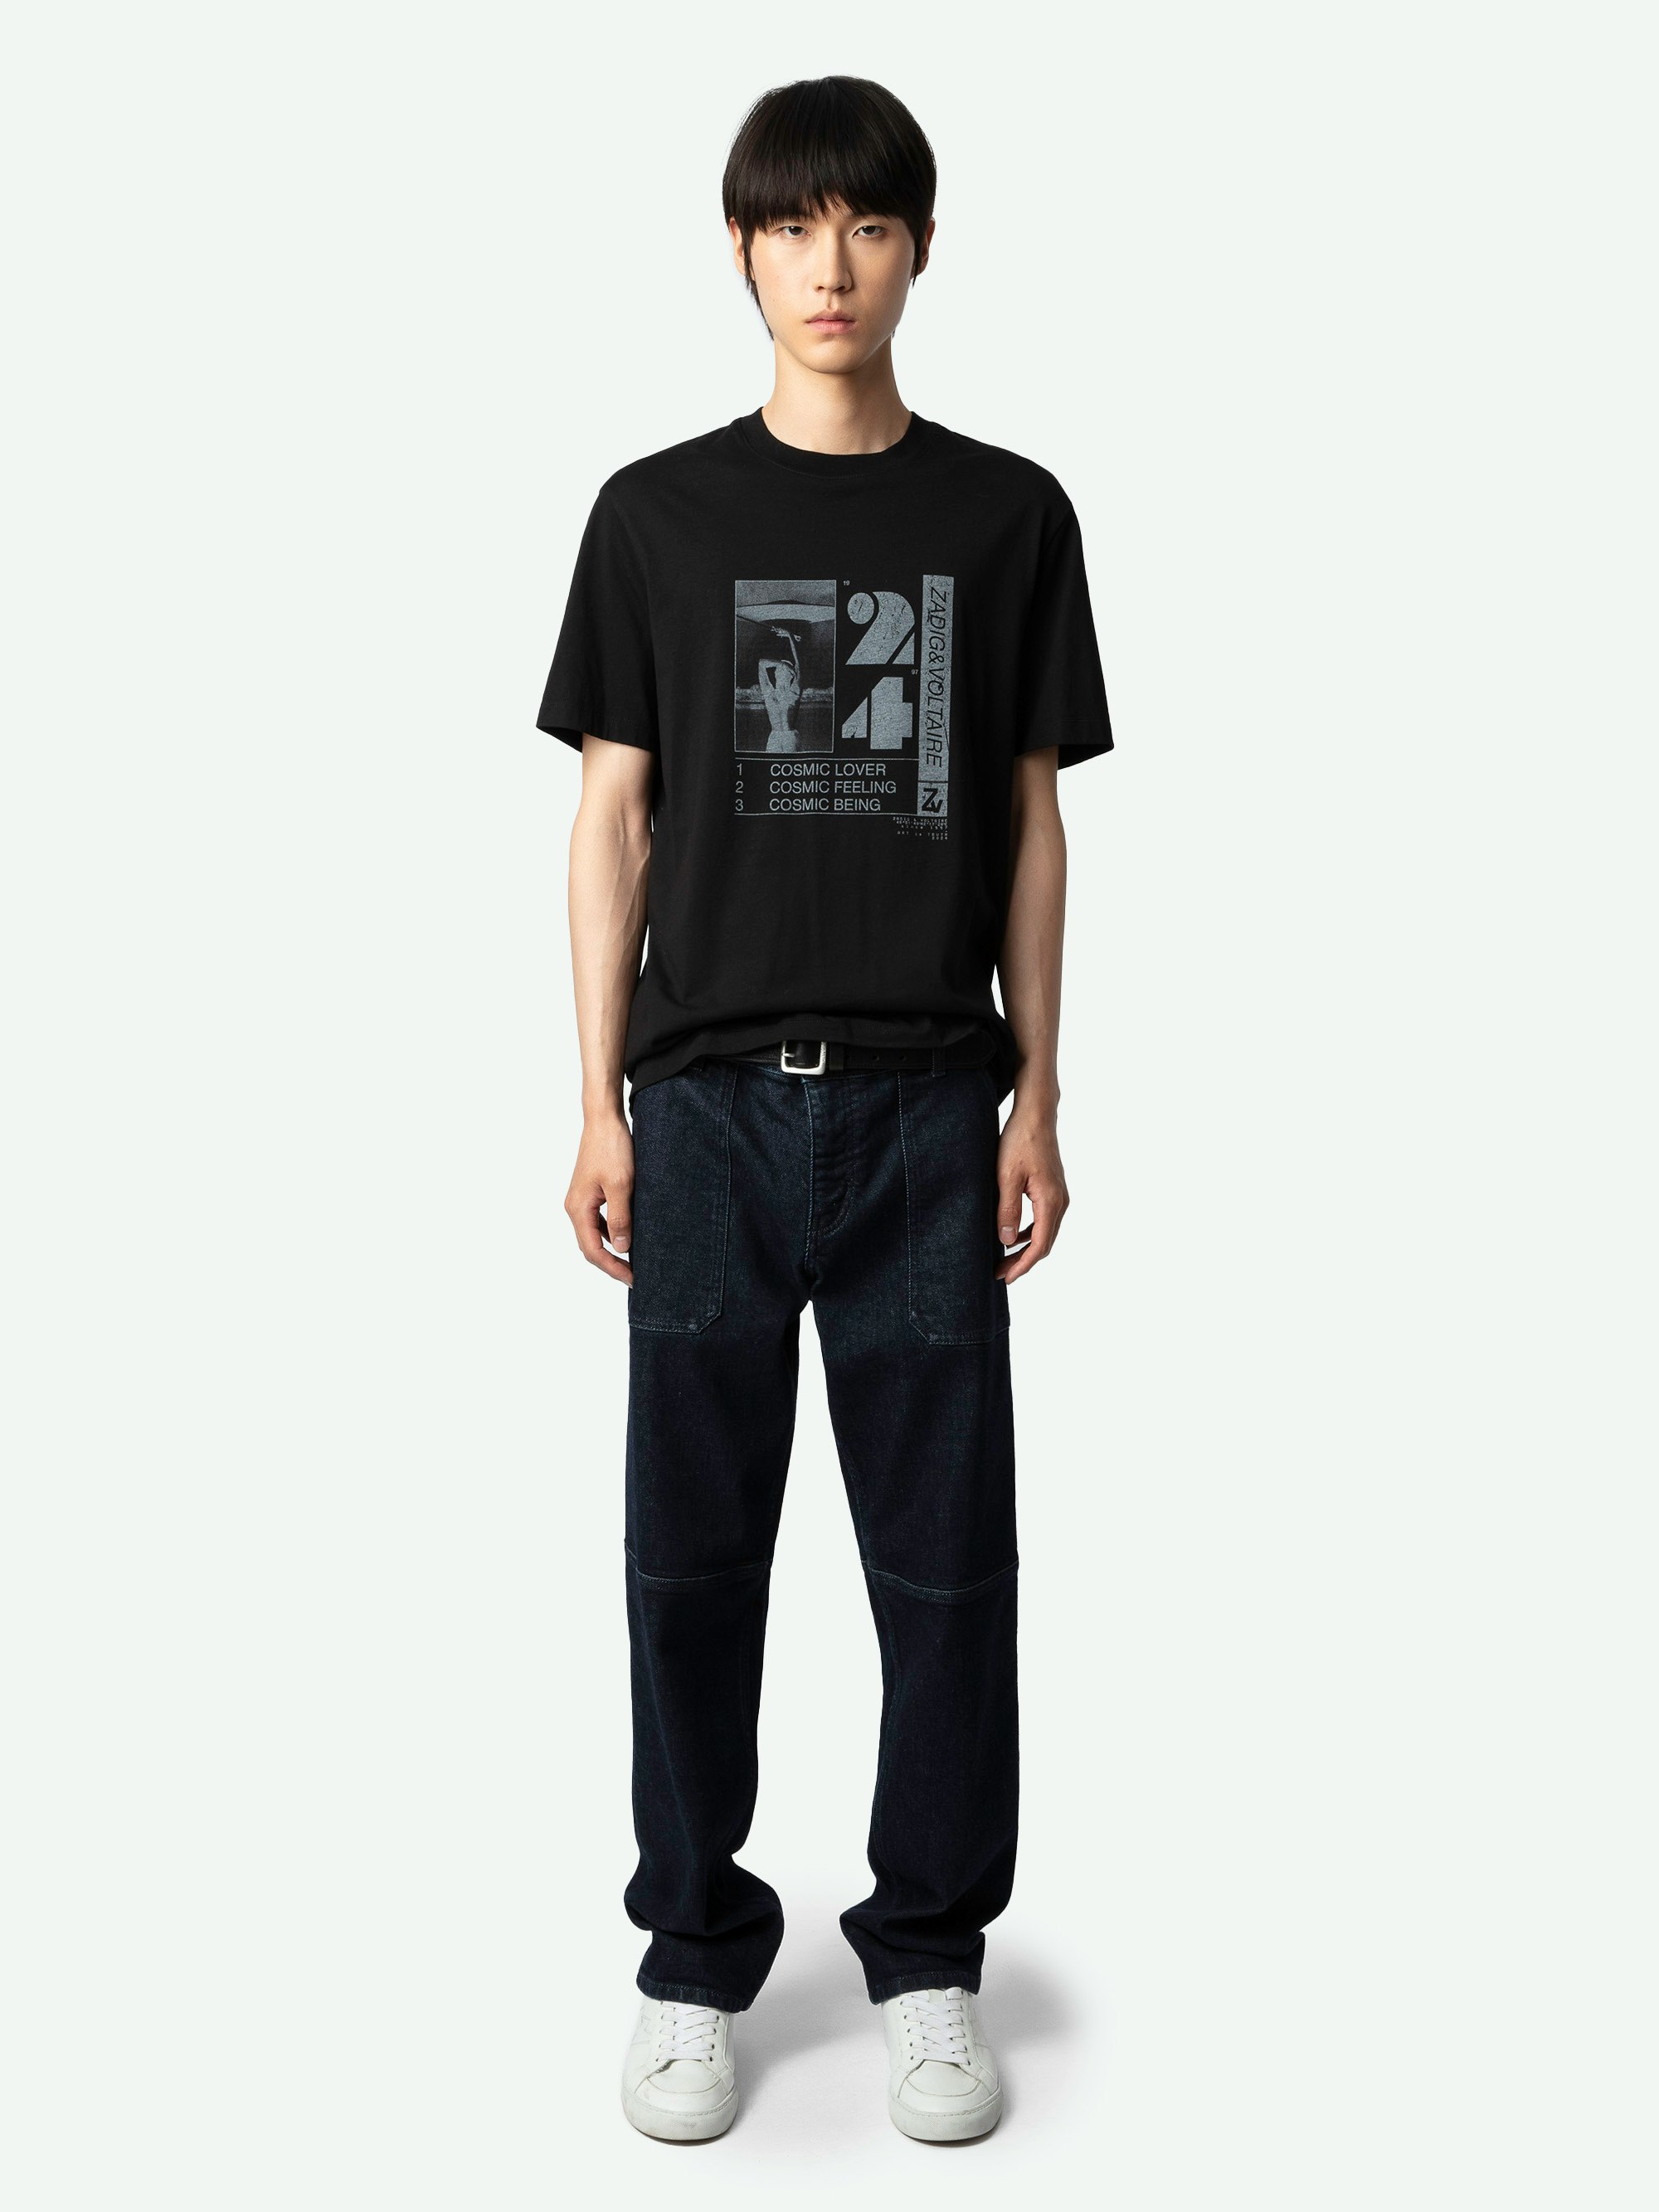 Camiseta Ted con Estampado Fotográfico - Camiseta de manga corta negra de algodón ecológico, con estampado fotográfico Cosmic en la parte delantera.